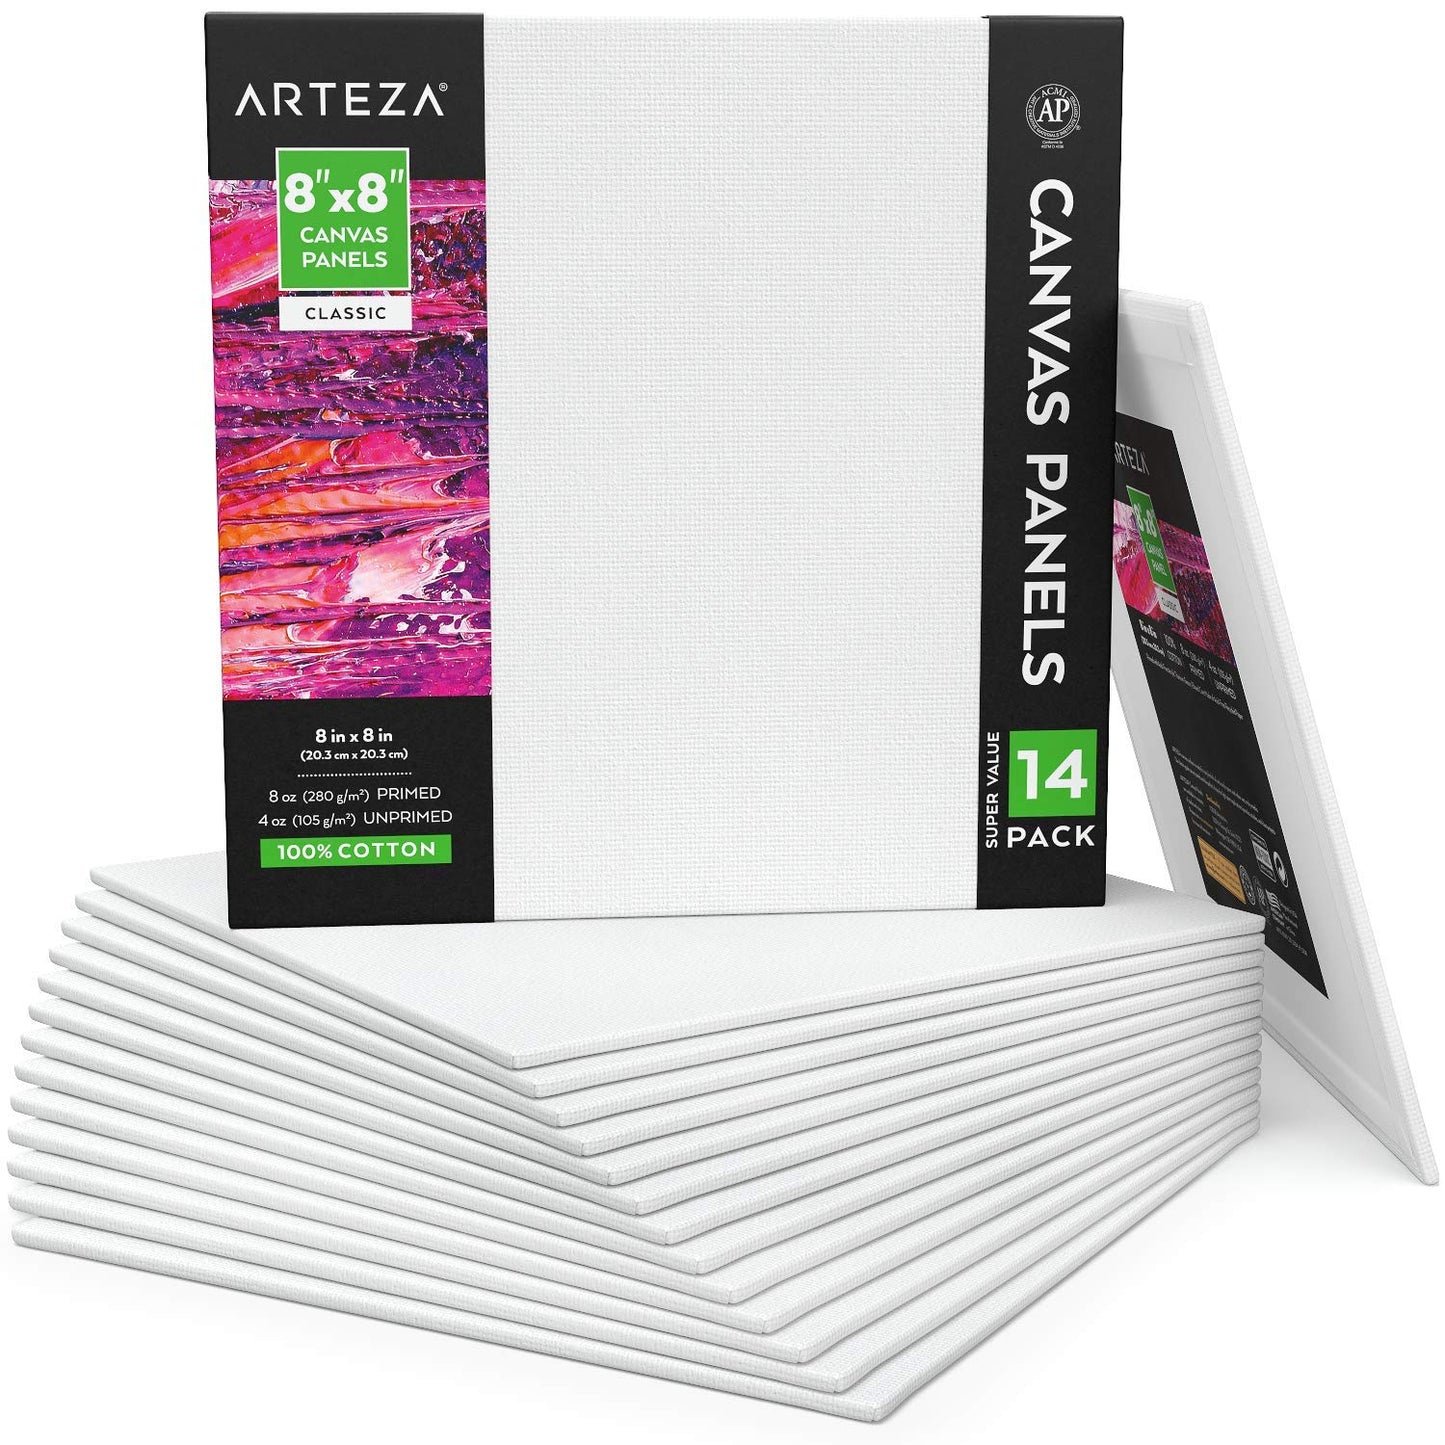 Arteza Classic Canvas Panels, 8" x 8" - 8 oz Gesso-Primed - Pack of 14